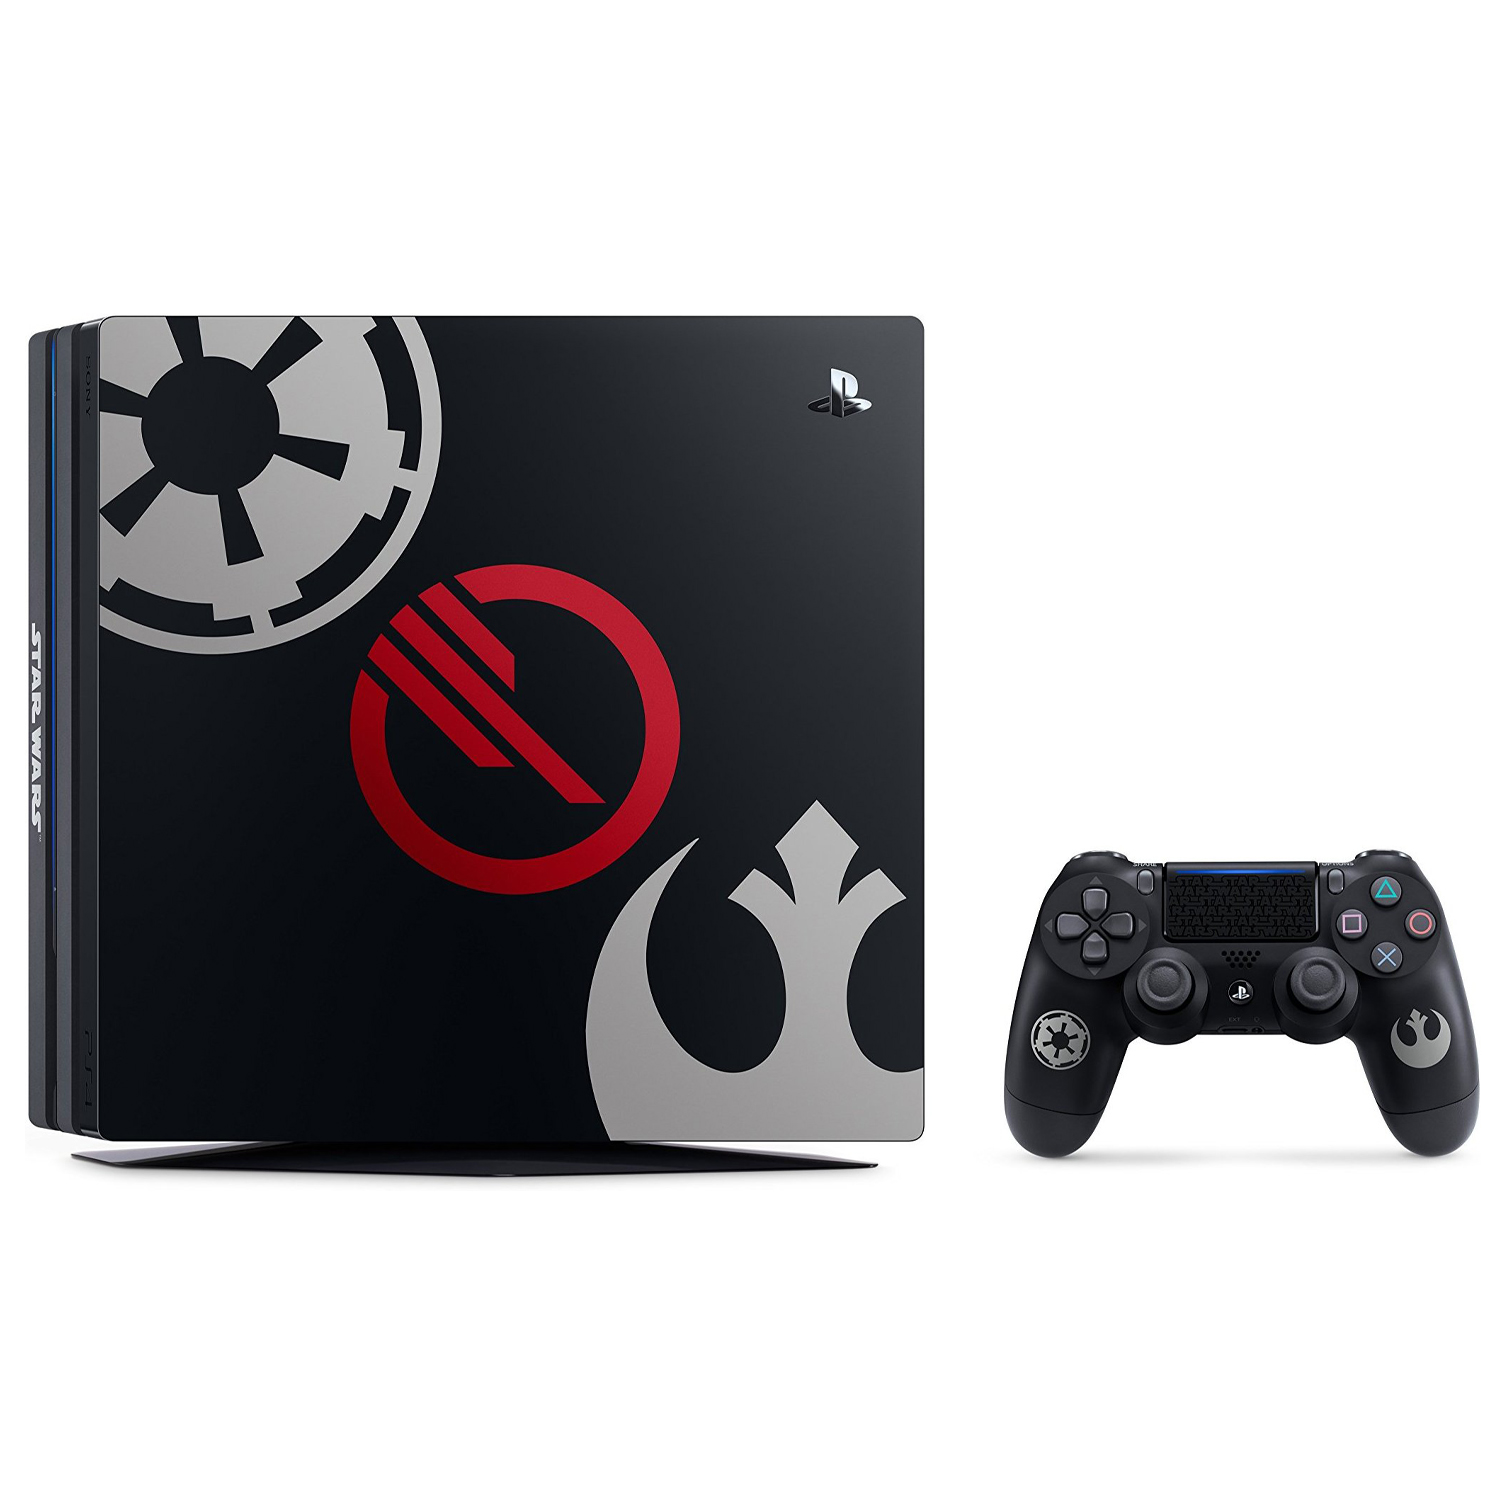 Sony PlayStation 4 Pro 1TB Star Wars Battlefront II Bundle, CUH-7115B - image 2 of 5